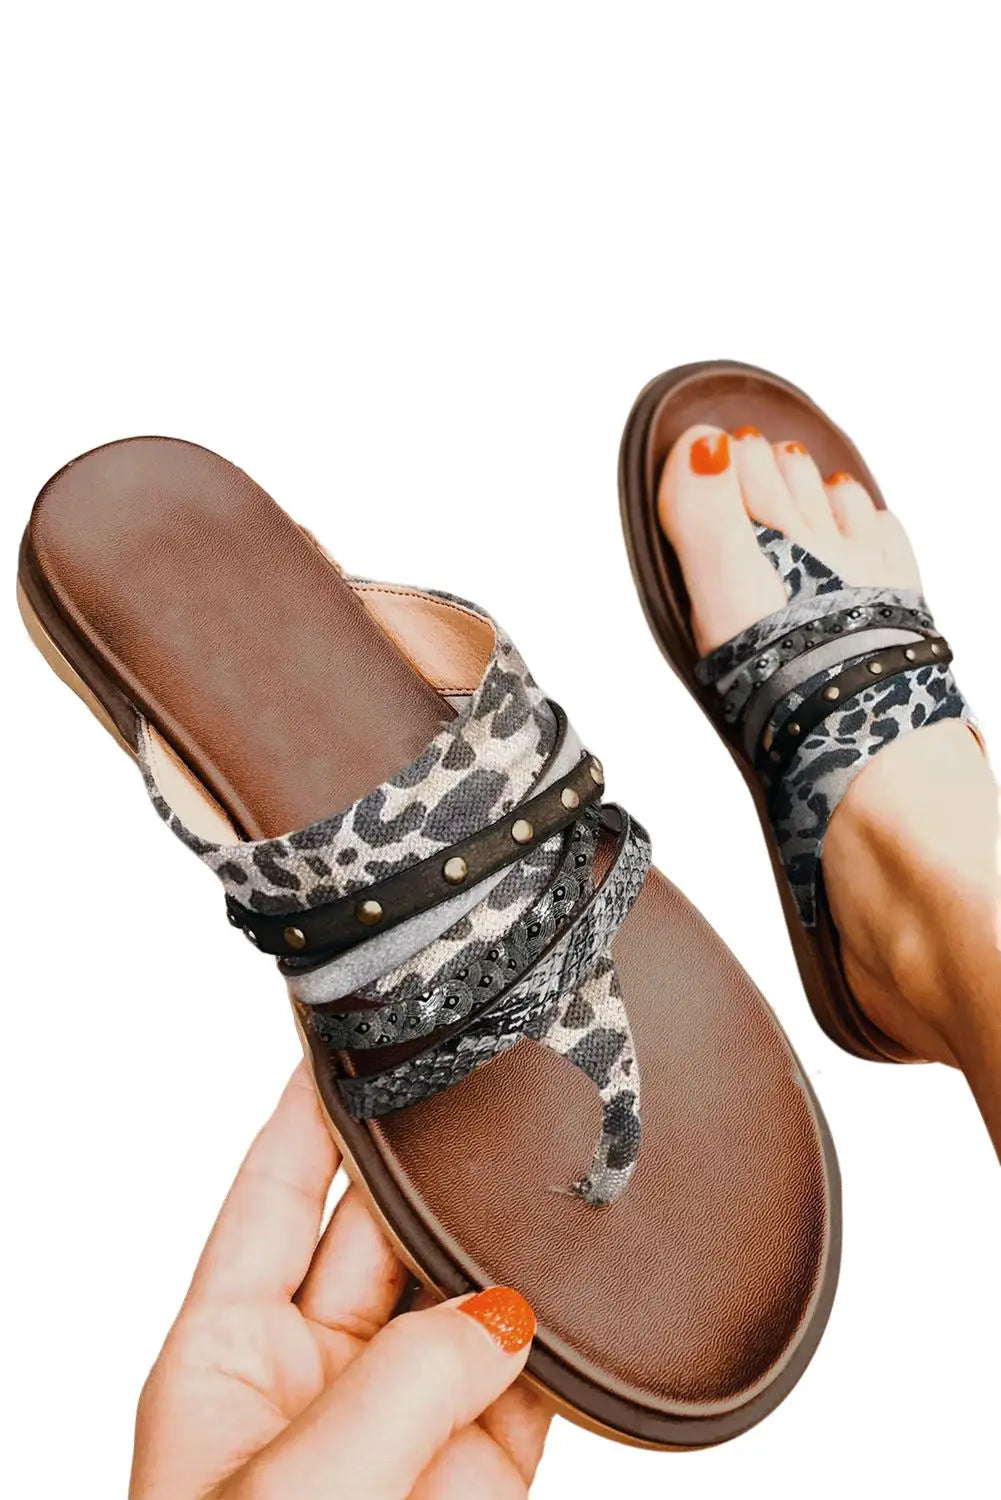 Leopard studded animal print flip flop sandals - slippers